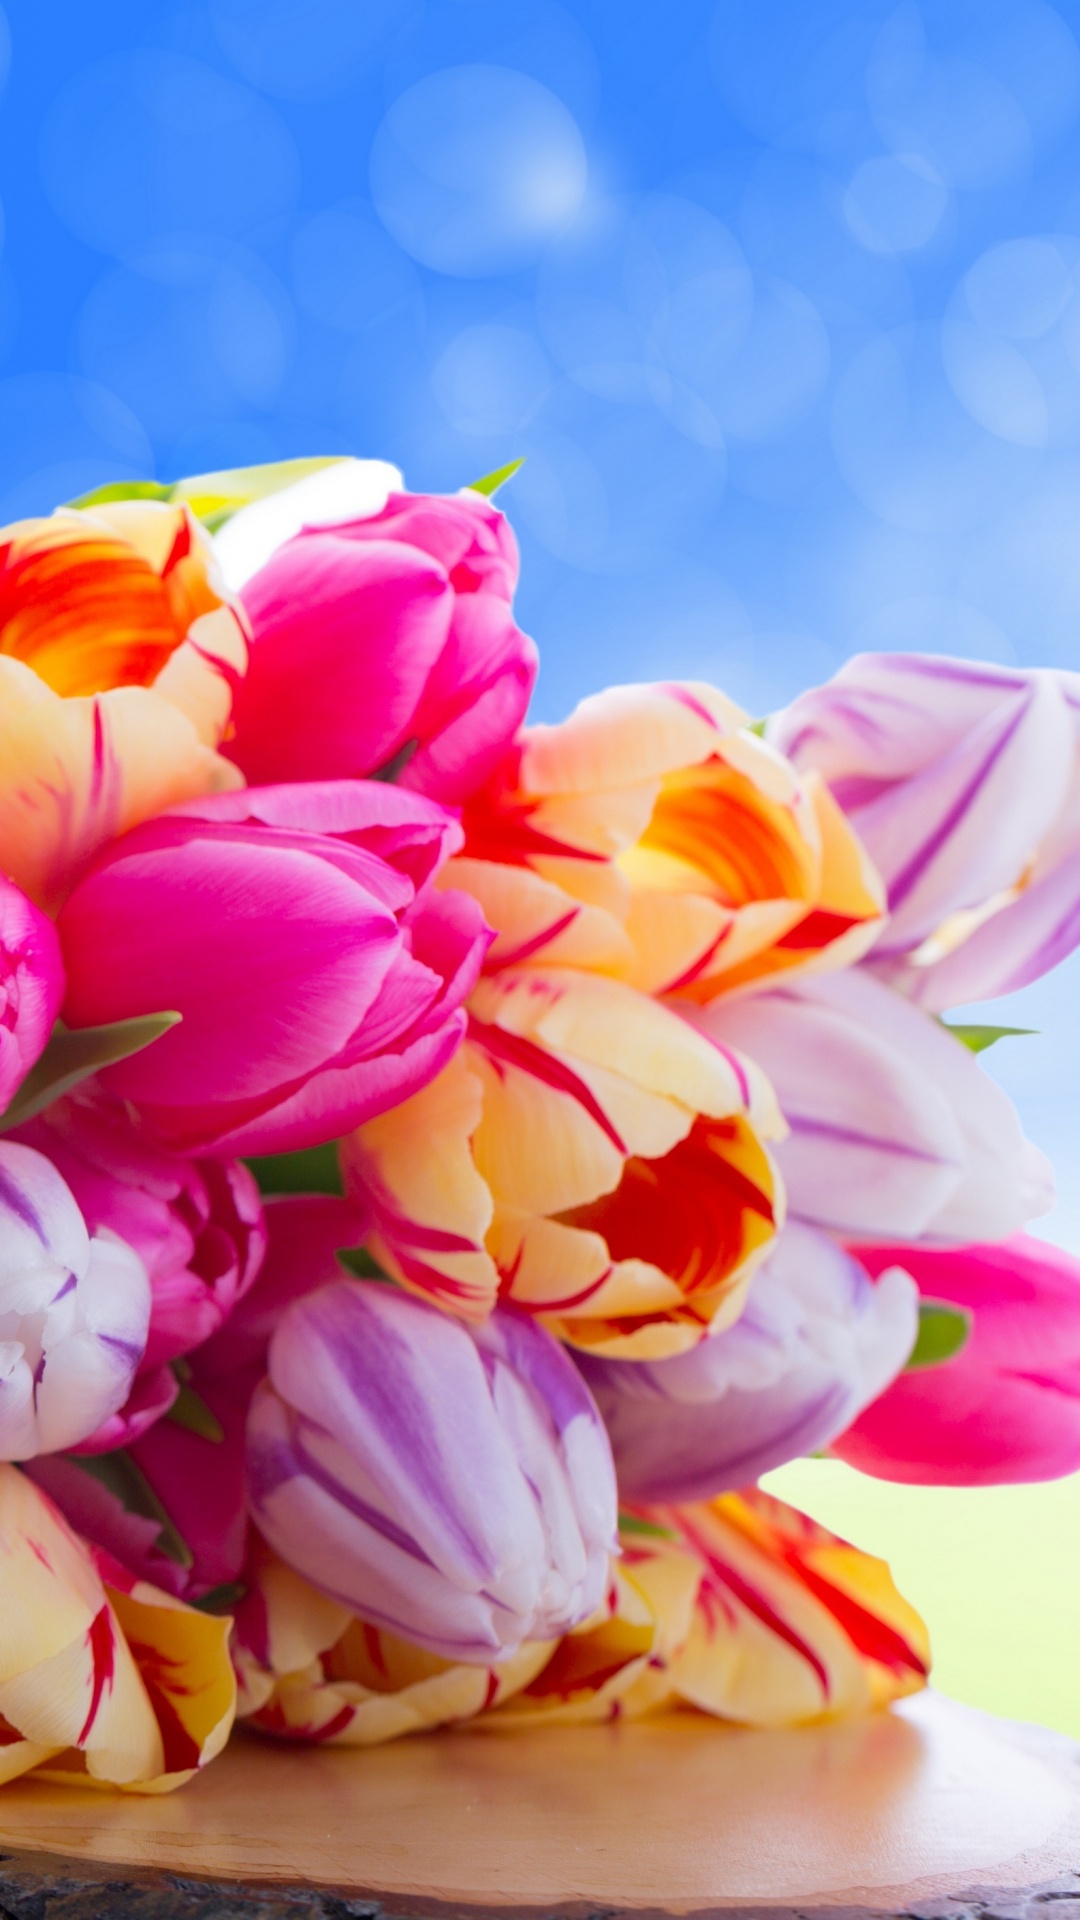 Bouquet de Tulipes Roses et Jaunes. Wallpaper in 1080x1920 Resolution